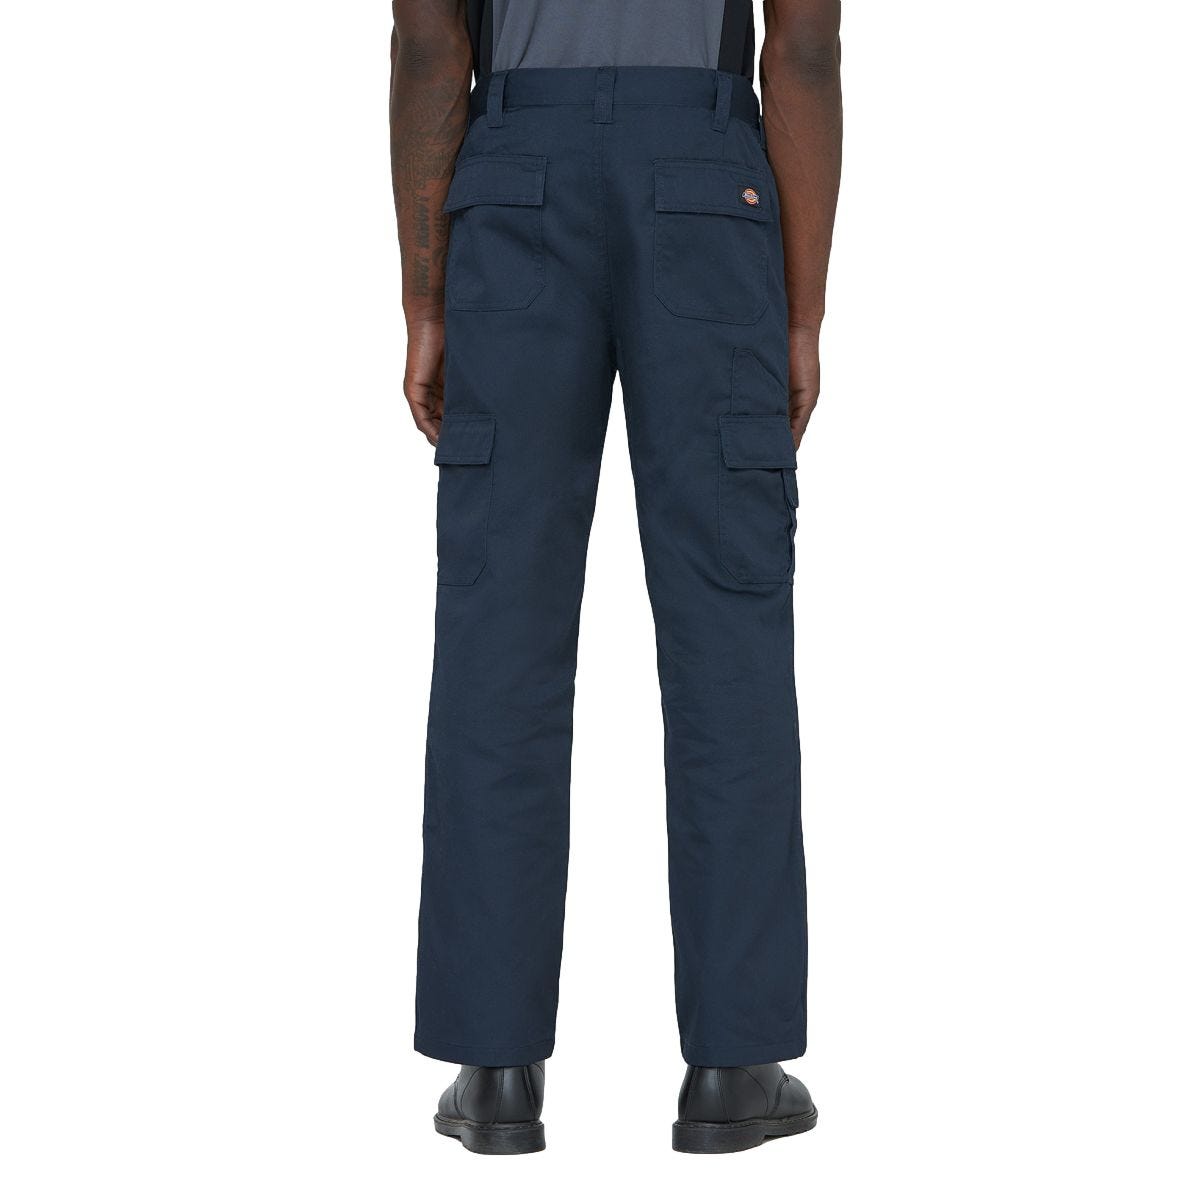 Pantalon Everyday Bleu marine - Dickies - Taille 40 3